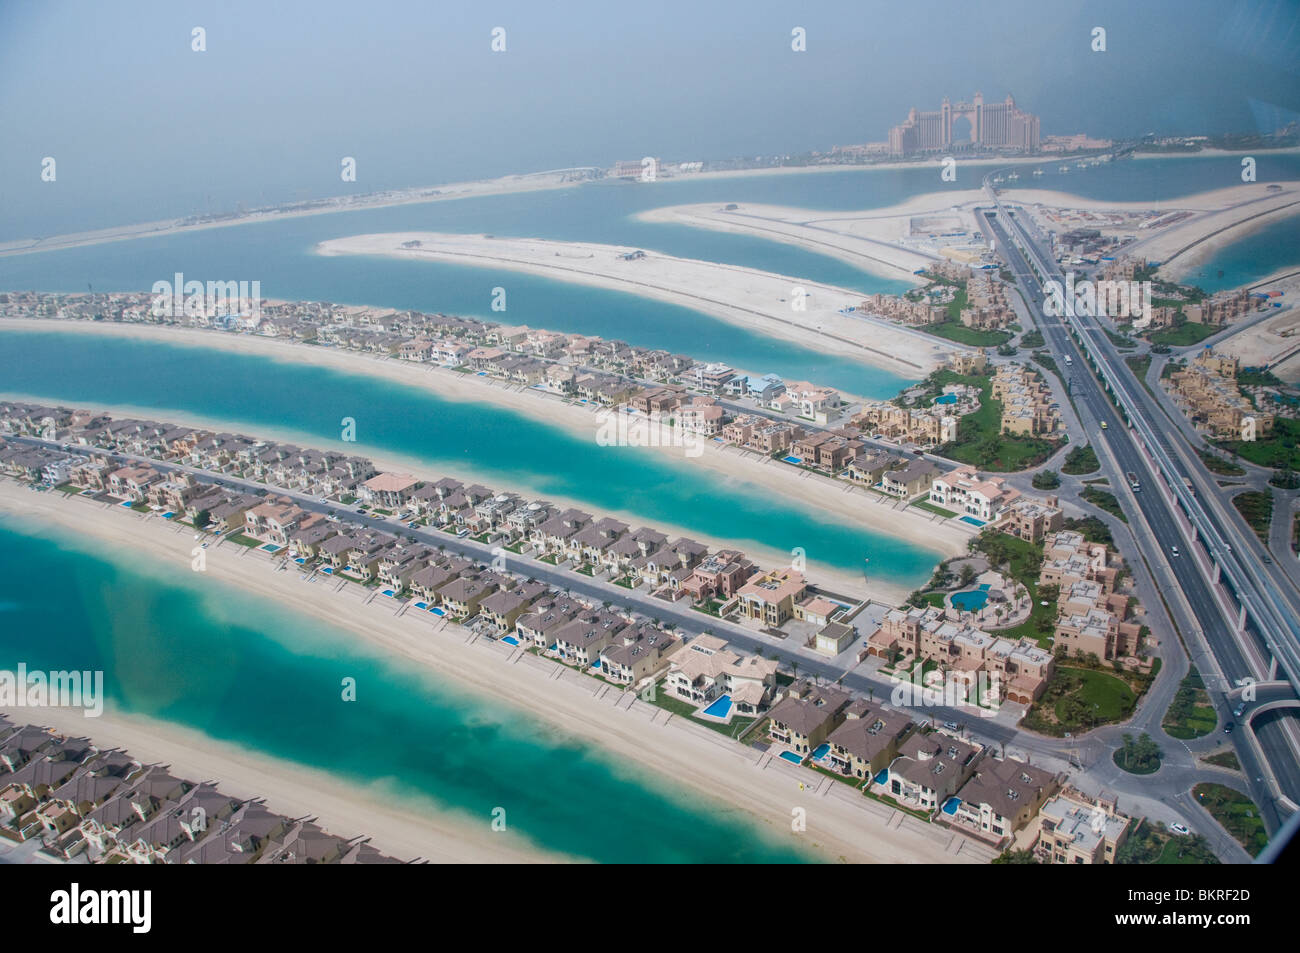 Aerial photograph of villas on the Palm Jumeirah a man-made island in Dubai UAE Stock Photo